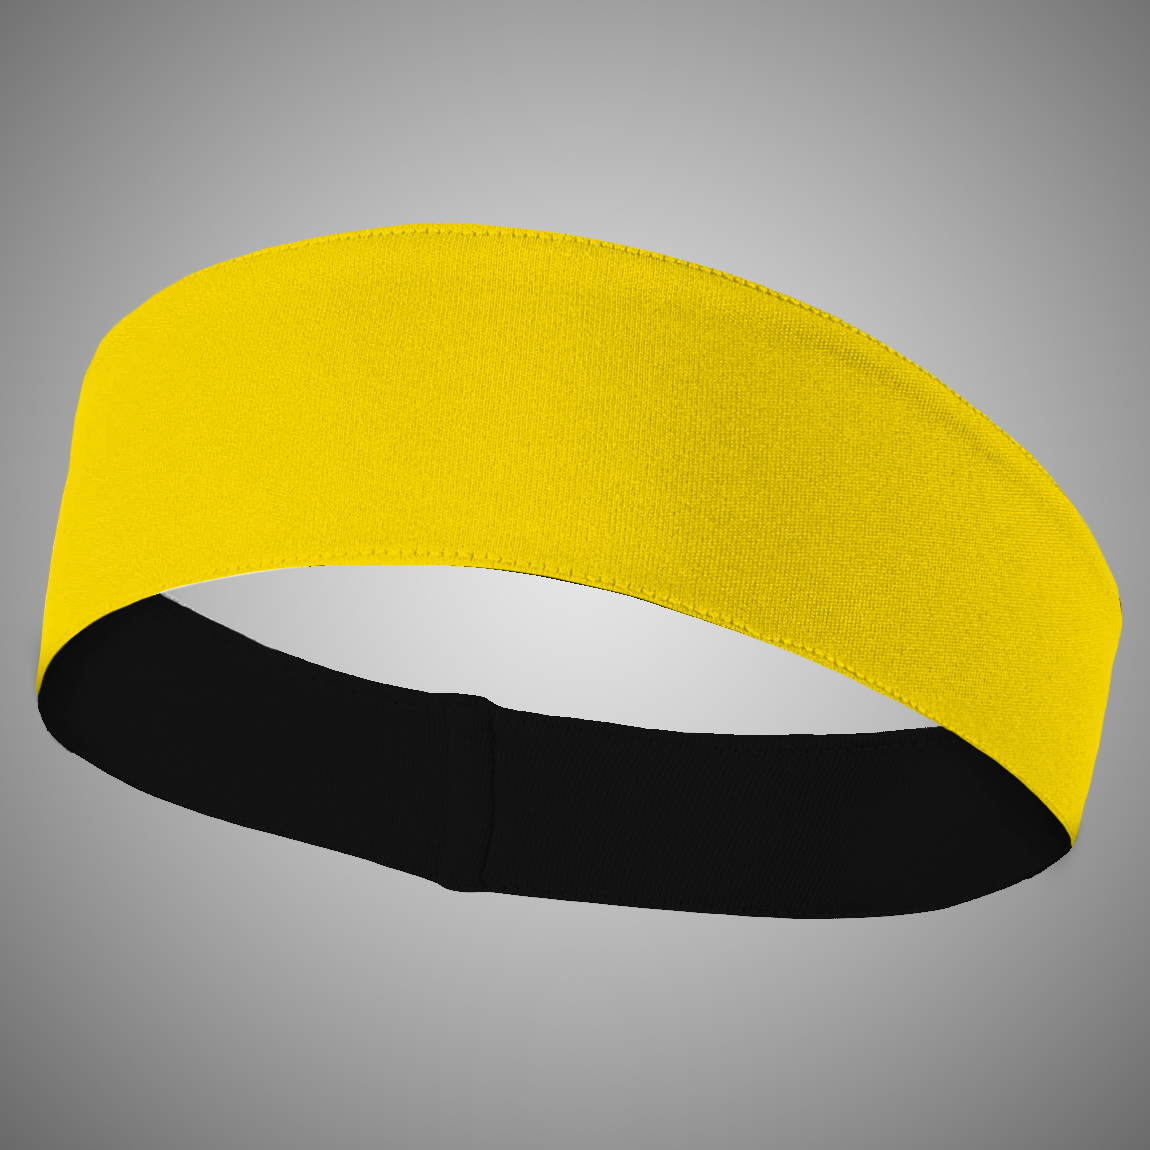 Download 23+ Headband Mockup Gif Yellowimages - Free PSD Mockup ...